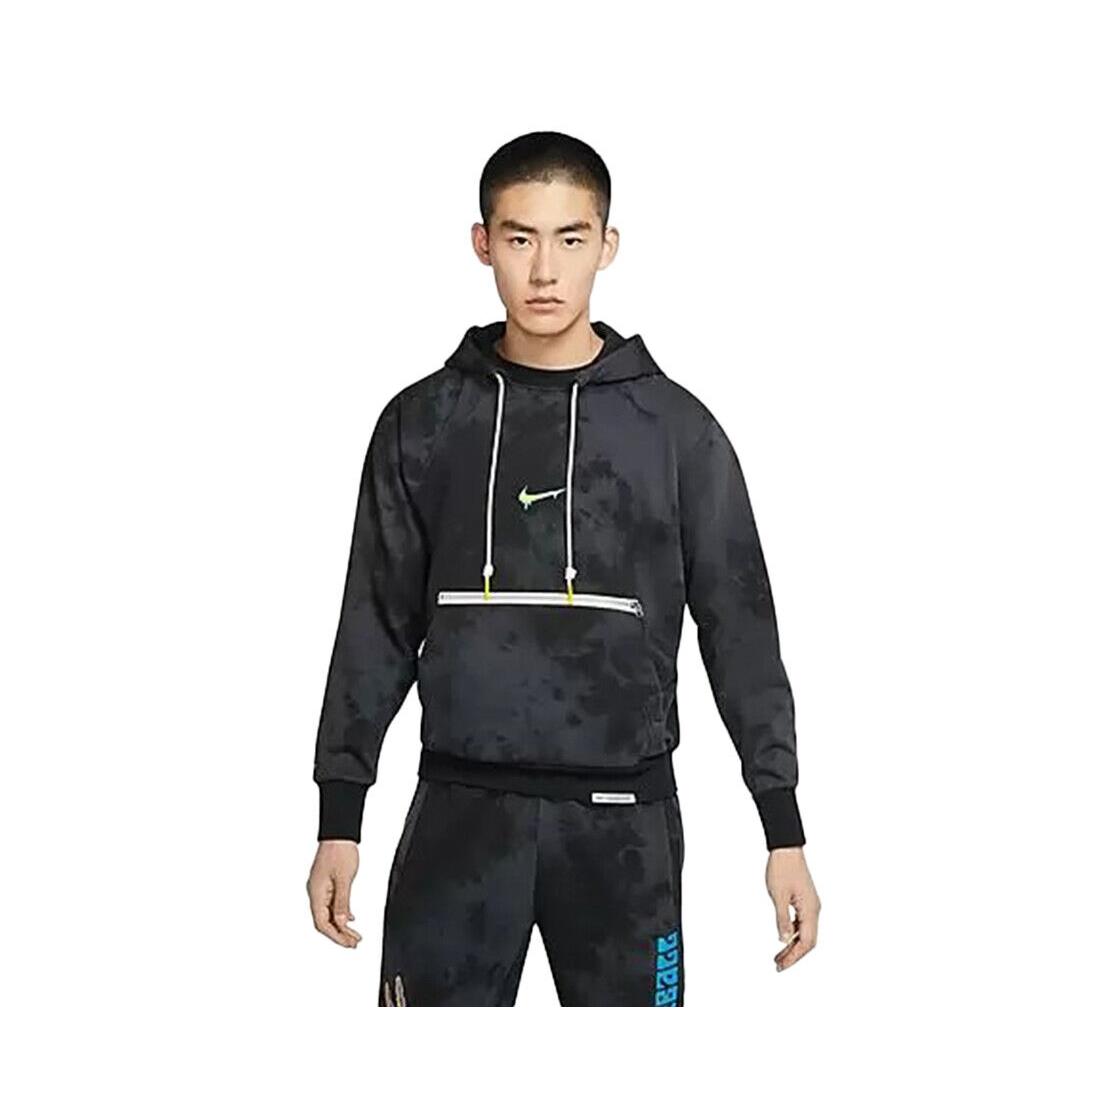 Nike Hardwood Basketball Pullover Mens Jackets Size Xxl Color: Black/teal